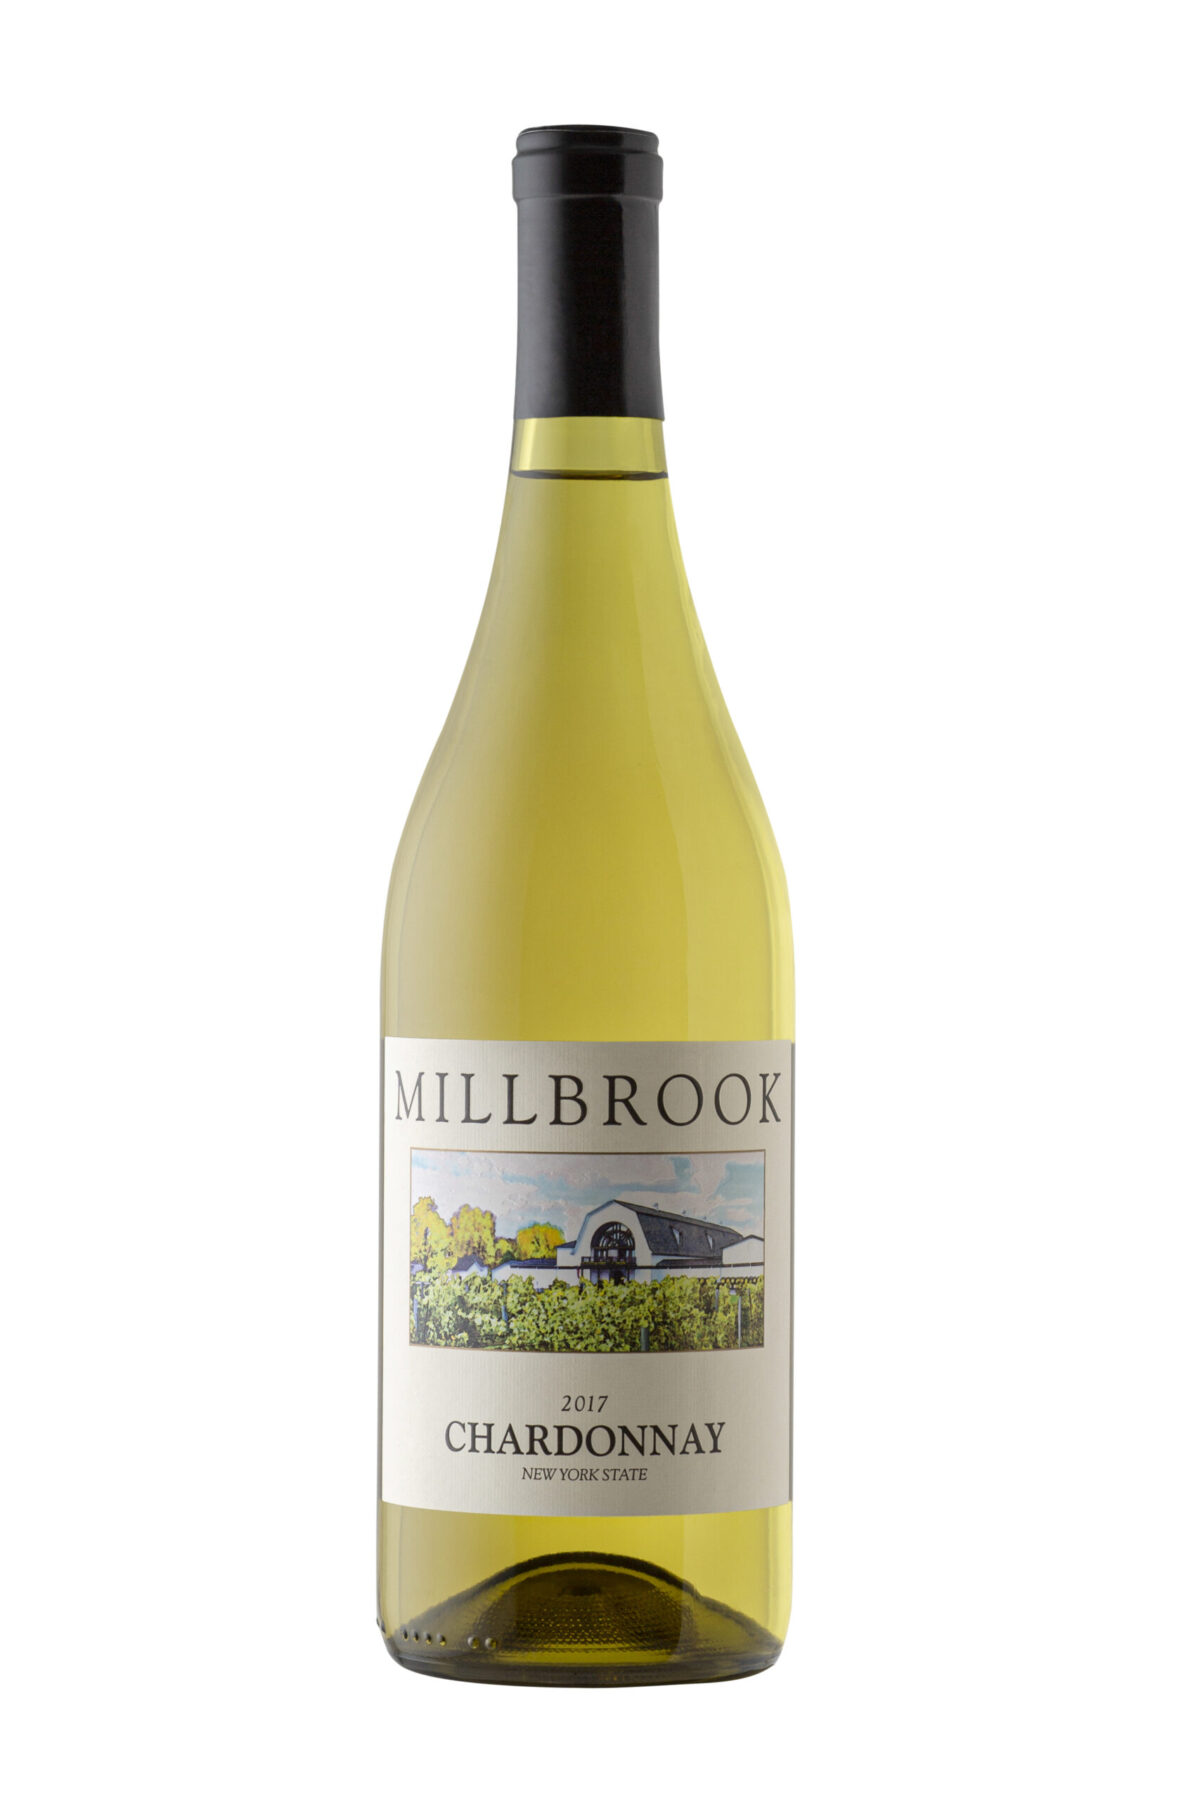 Millbrooke Chardonnay